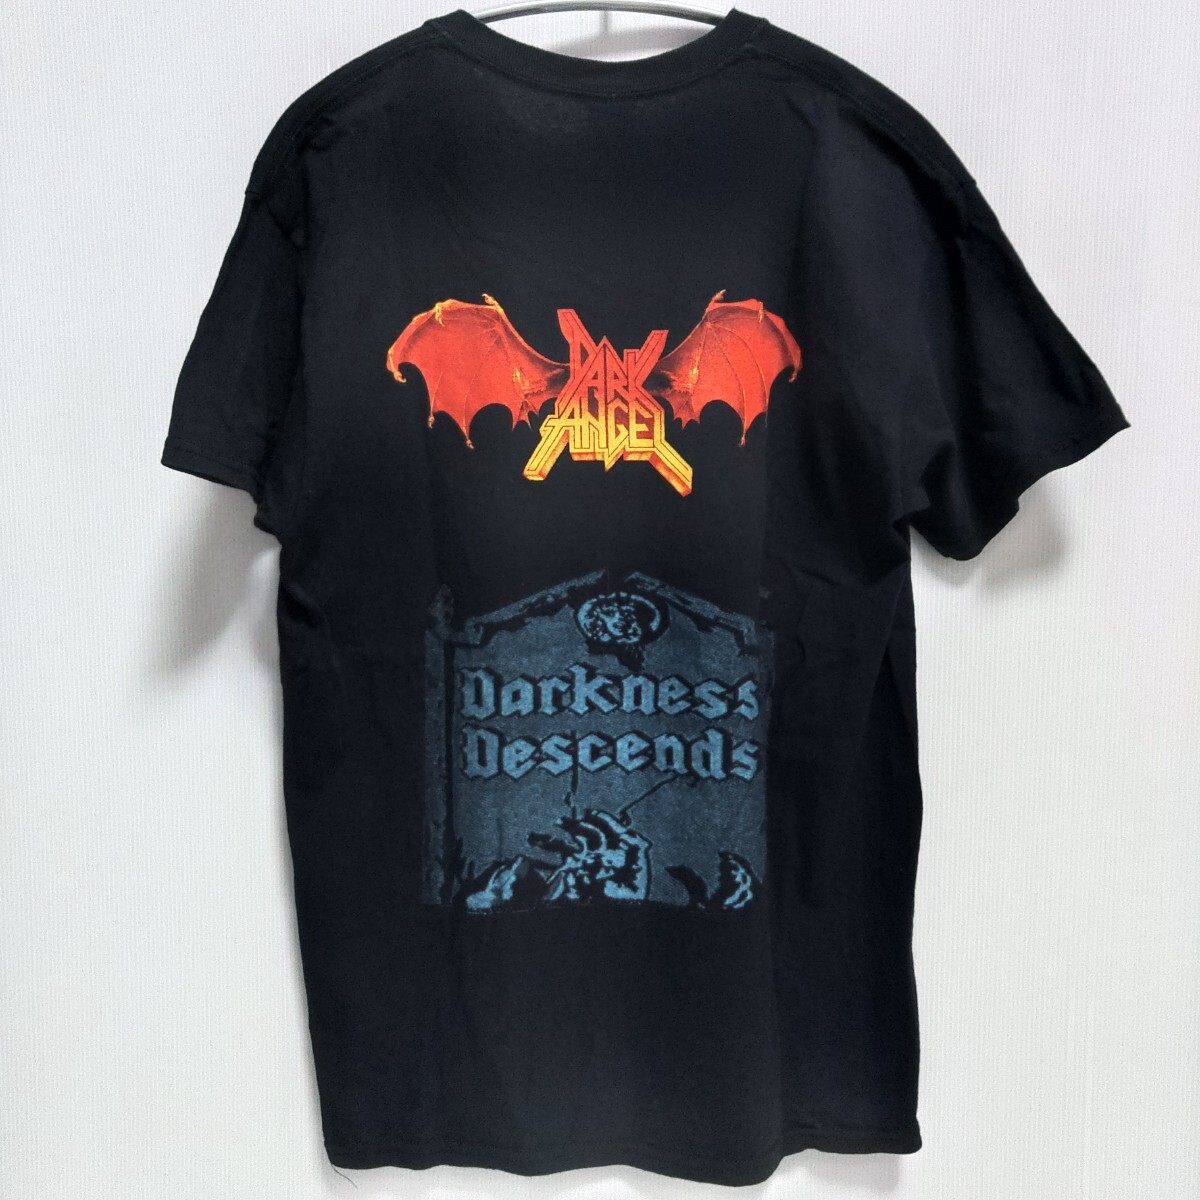  band T-shirt movie T-shirt M size 4 put on old clothes set sale Arch Enemy DARK ANGEL Suspiriamerotes slash horror 